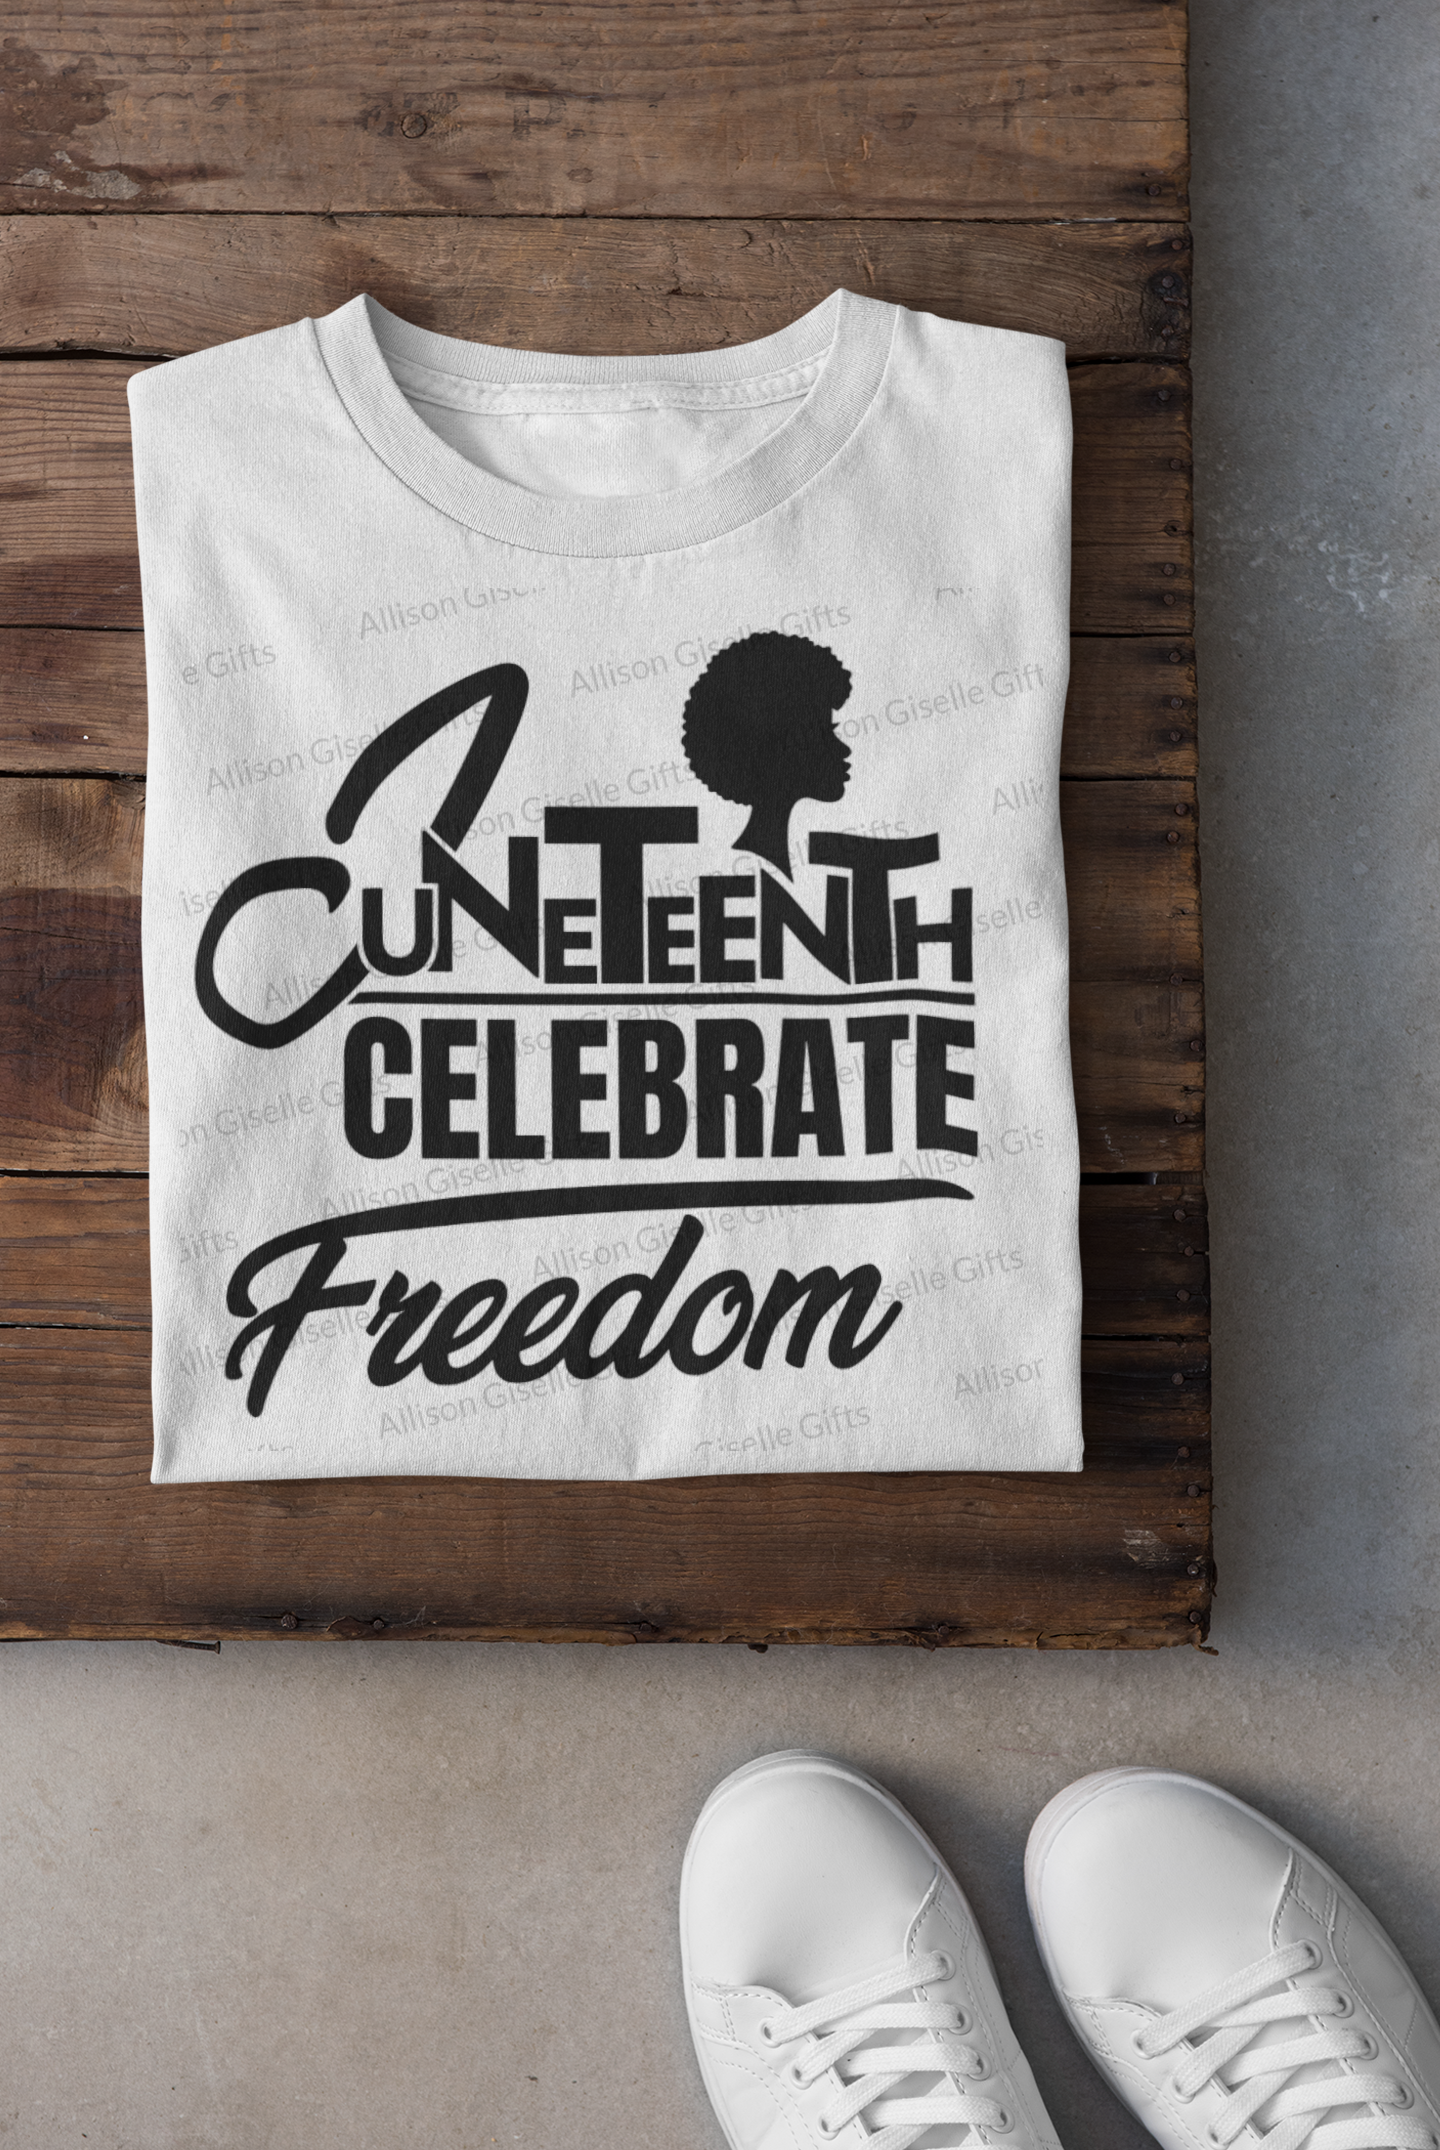 Juneteenth Celebrate Freedom T-Shirt, Celebration Shirt, Freedom Day Shirt, 1865 Shirt, Black Owned Shirt